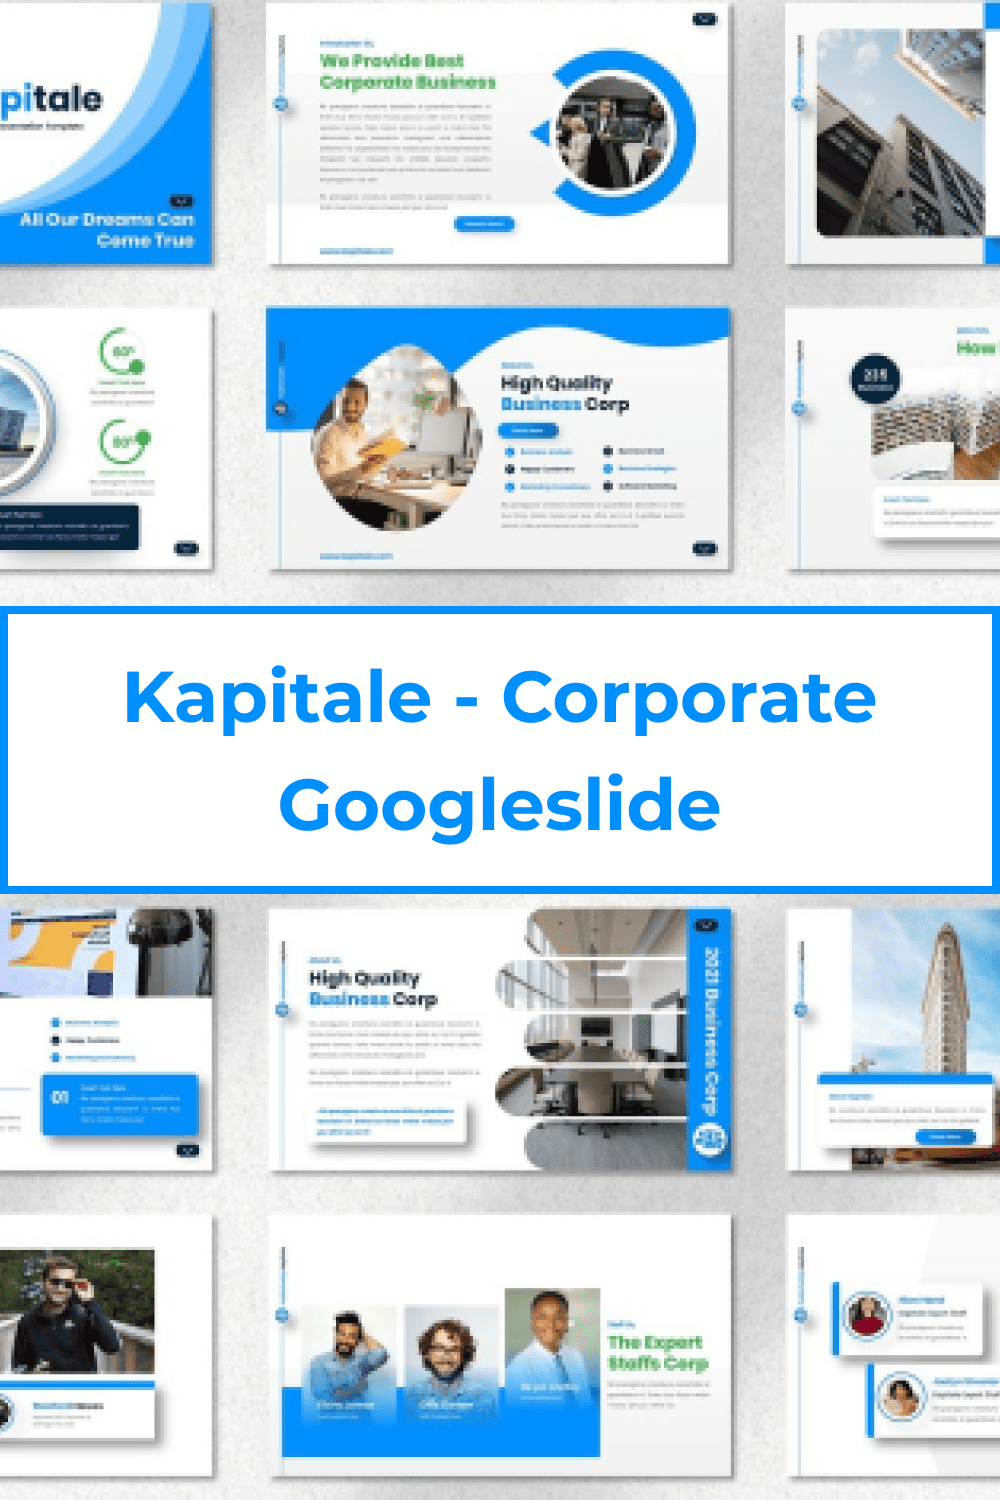 Kapitale - Corporate Googleslide Pinterest.